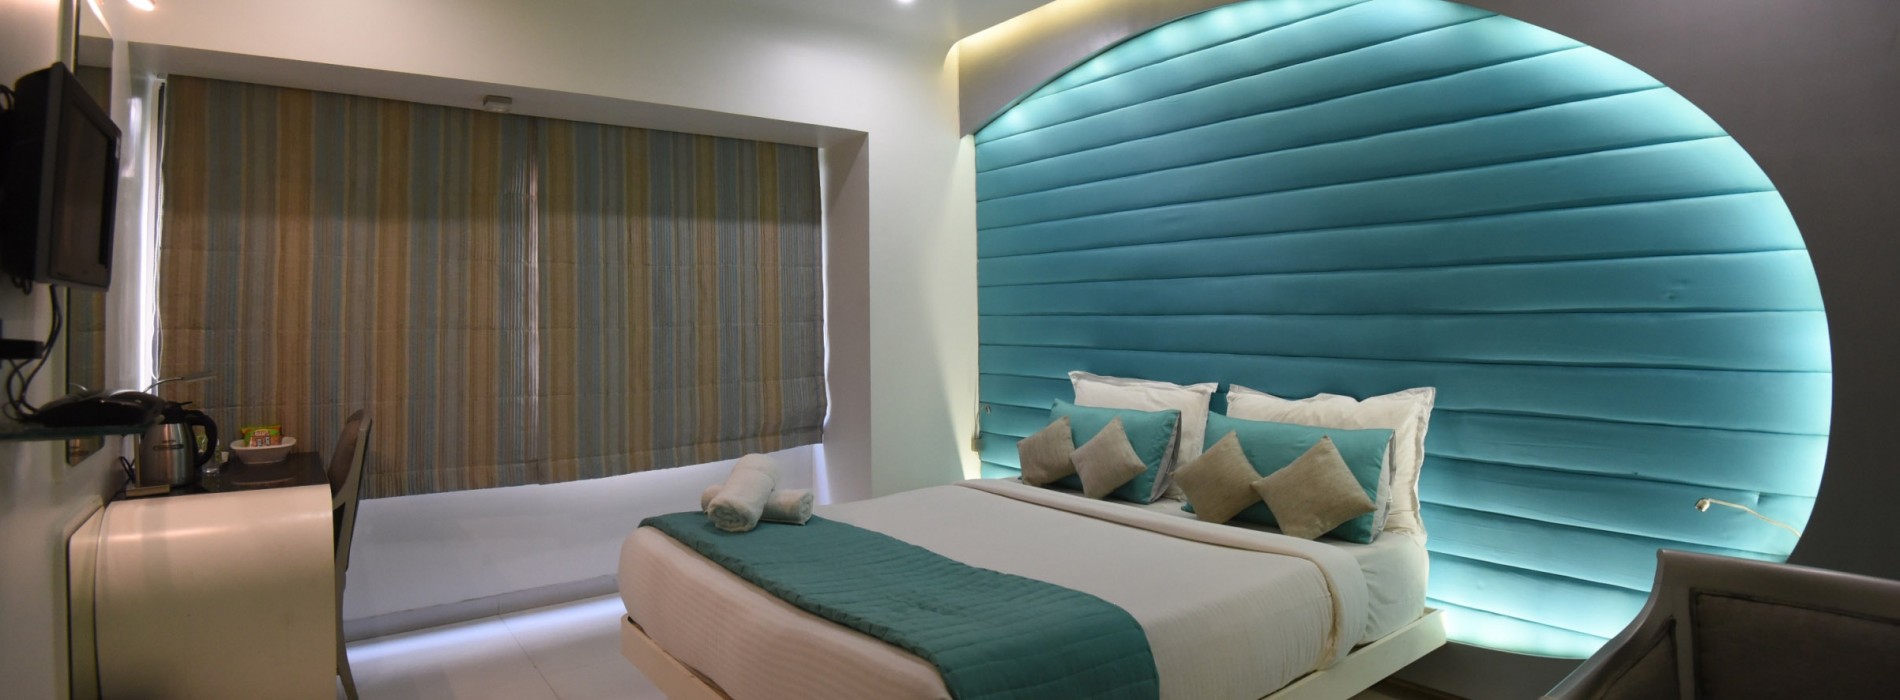 VITS Luxury Hotels launches ‘VITS Sharanam Thane’